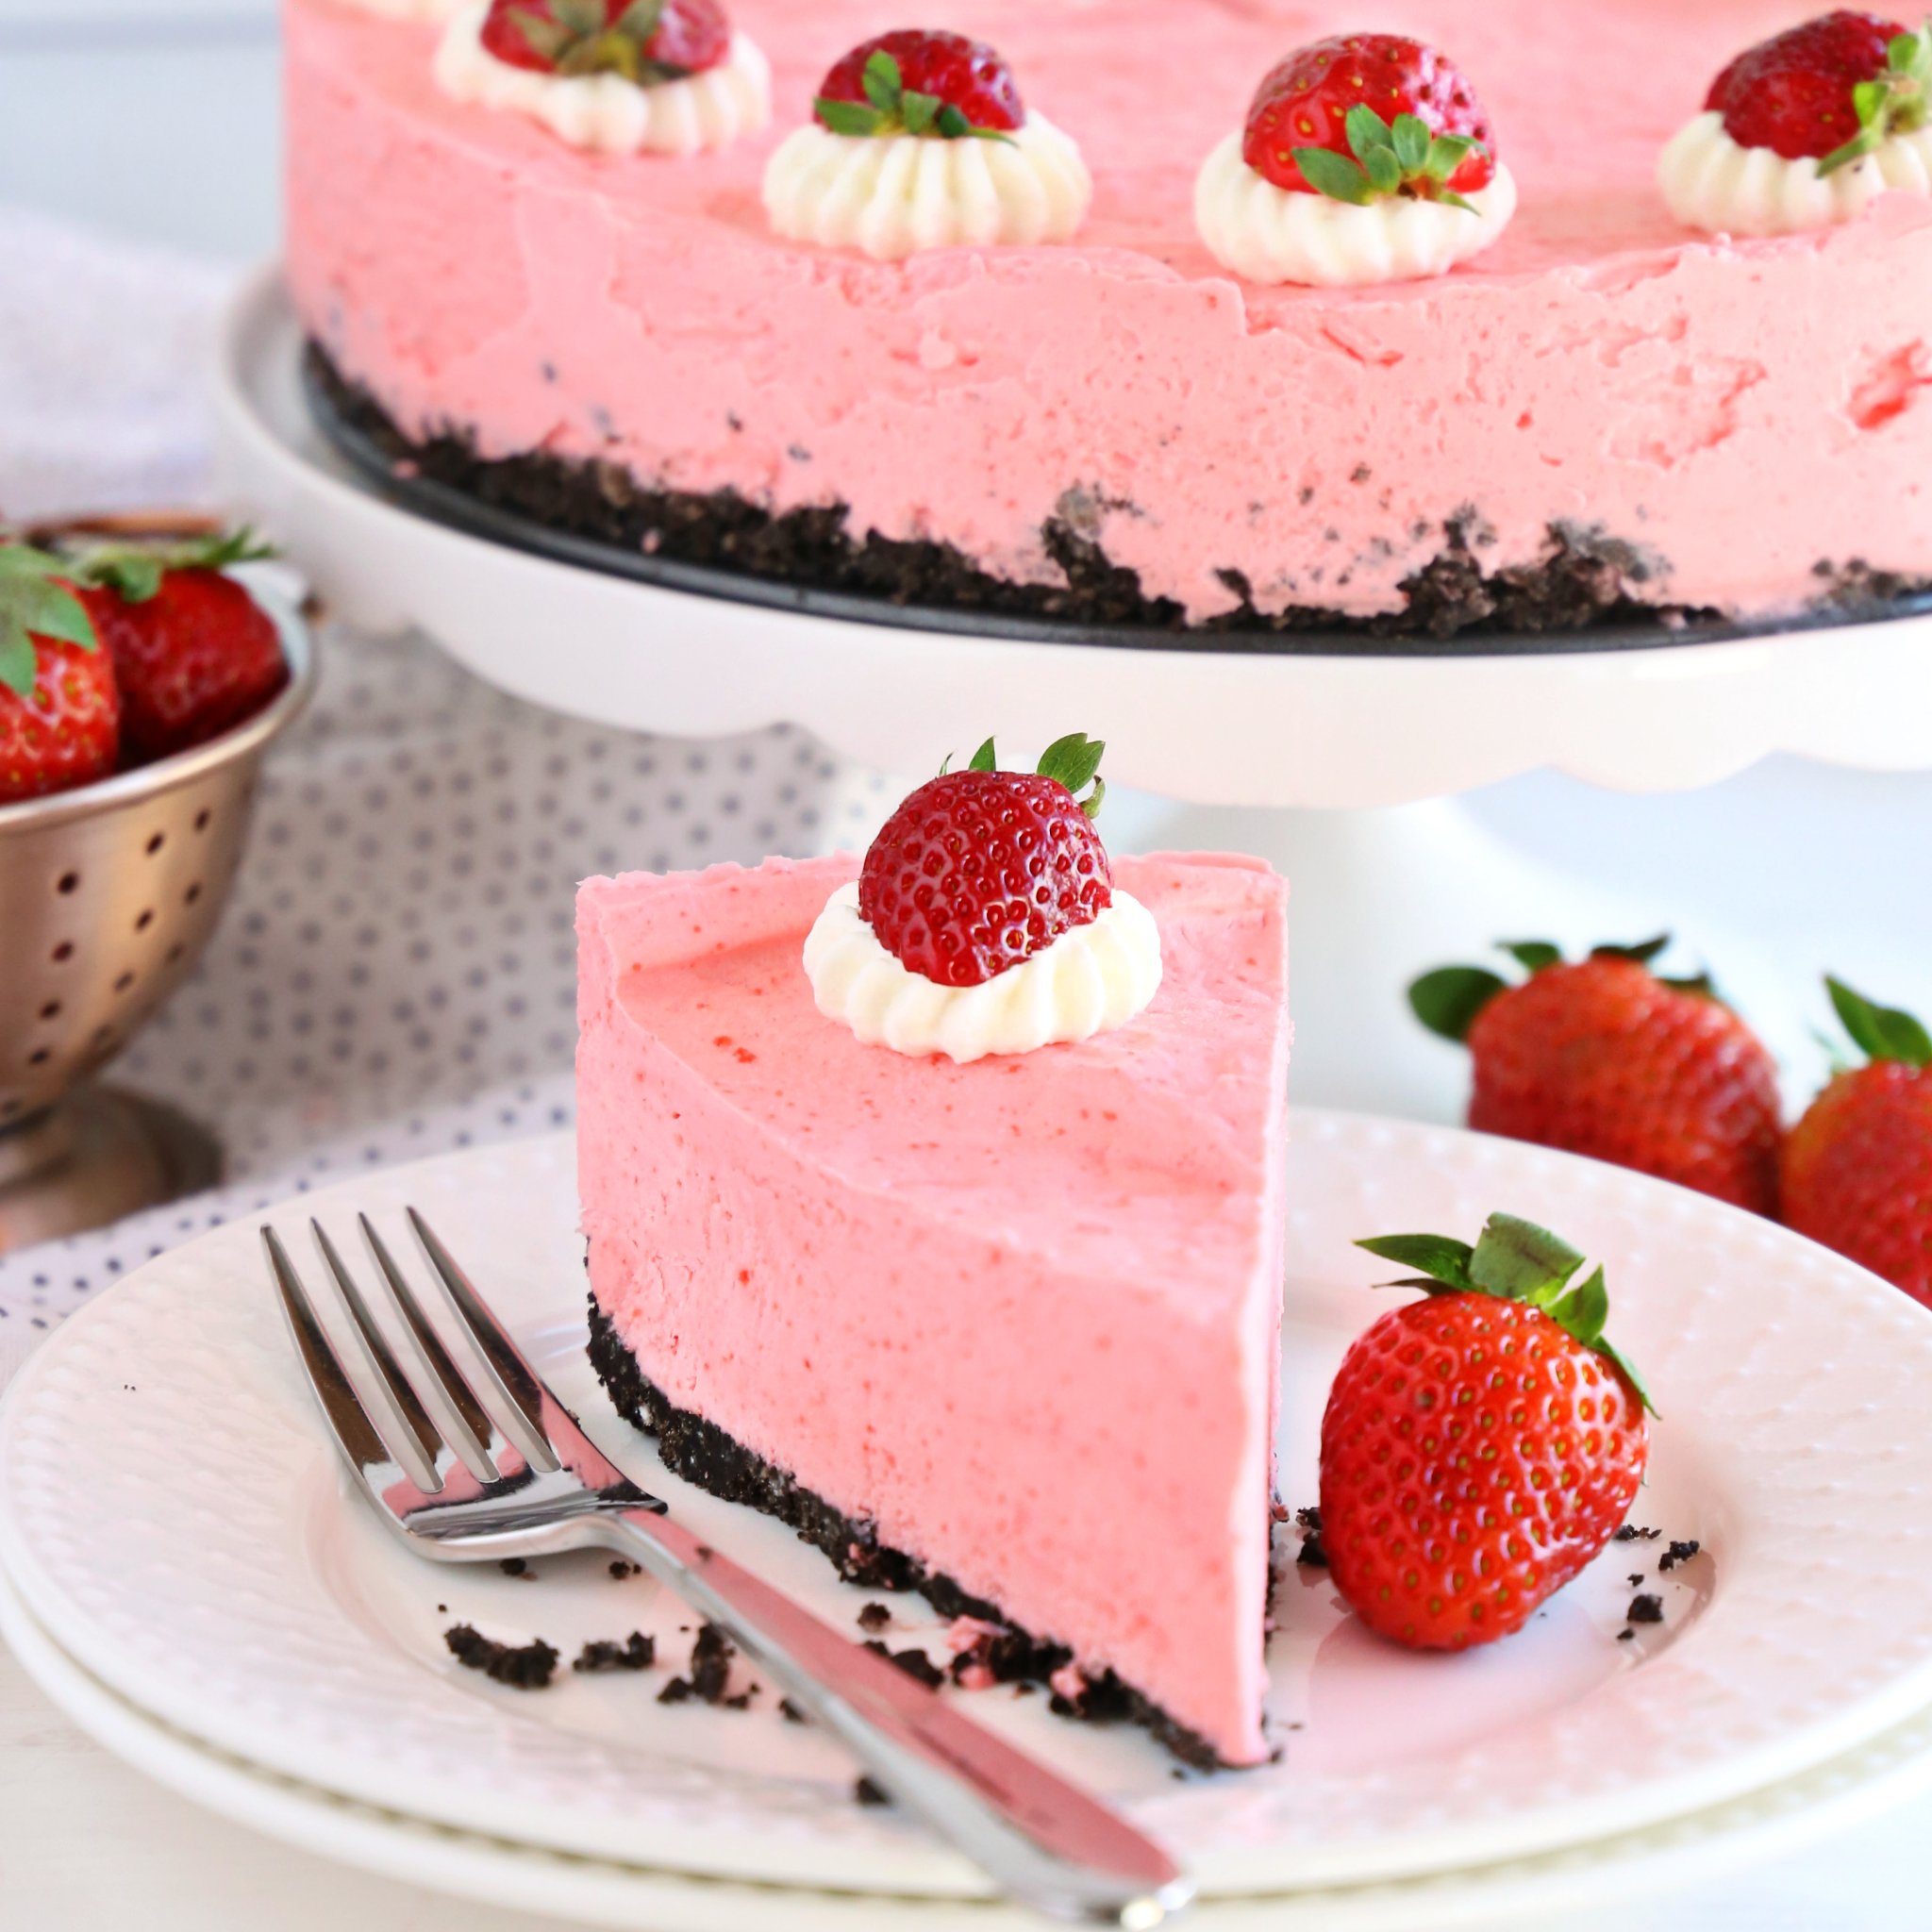 slice of no bake strawberry cheesecake with gelatin